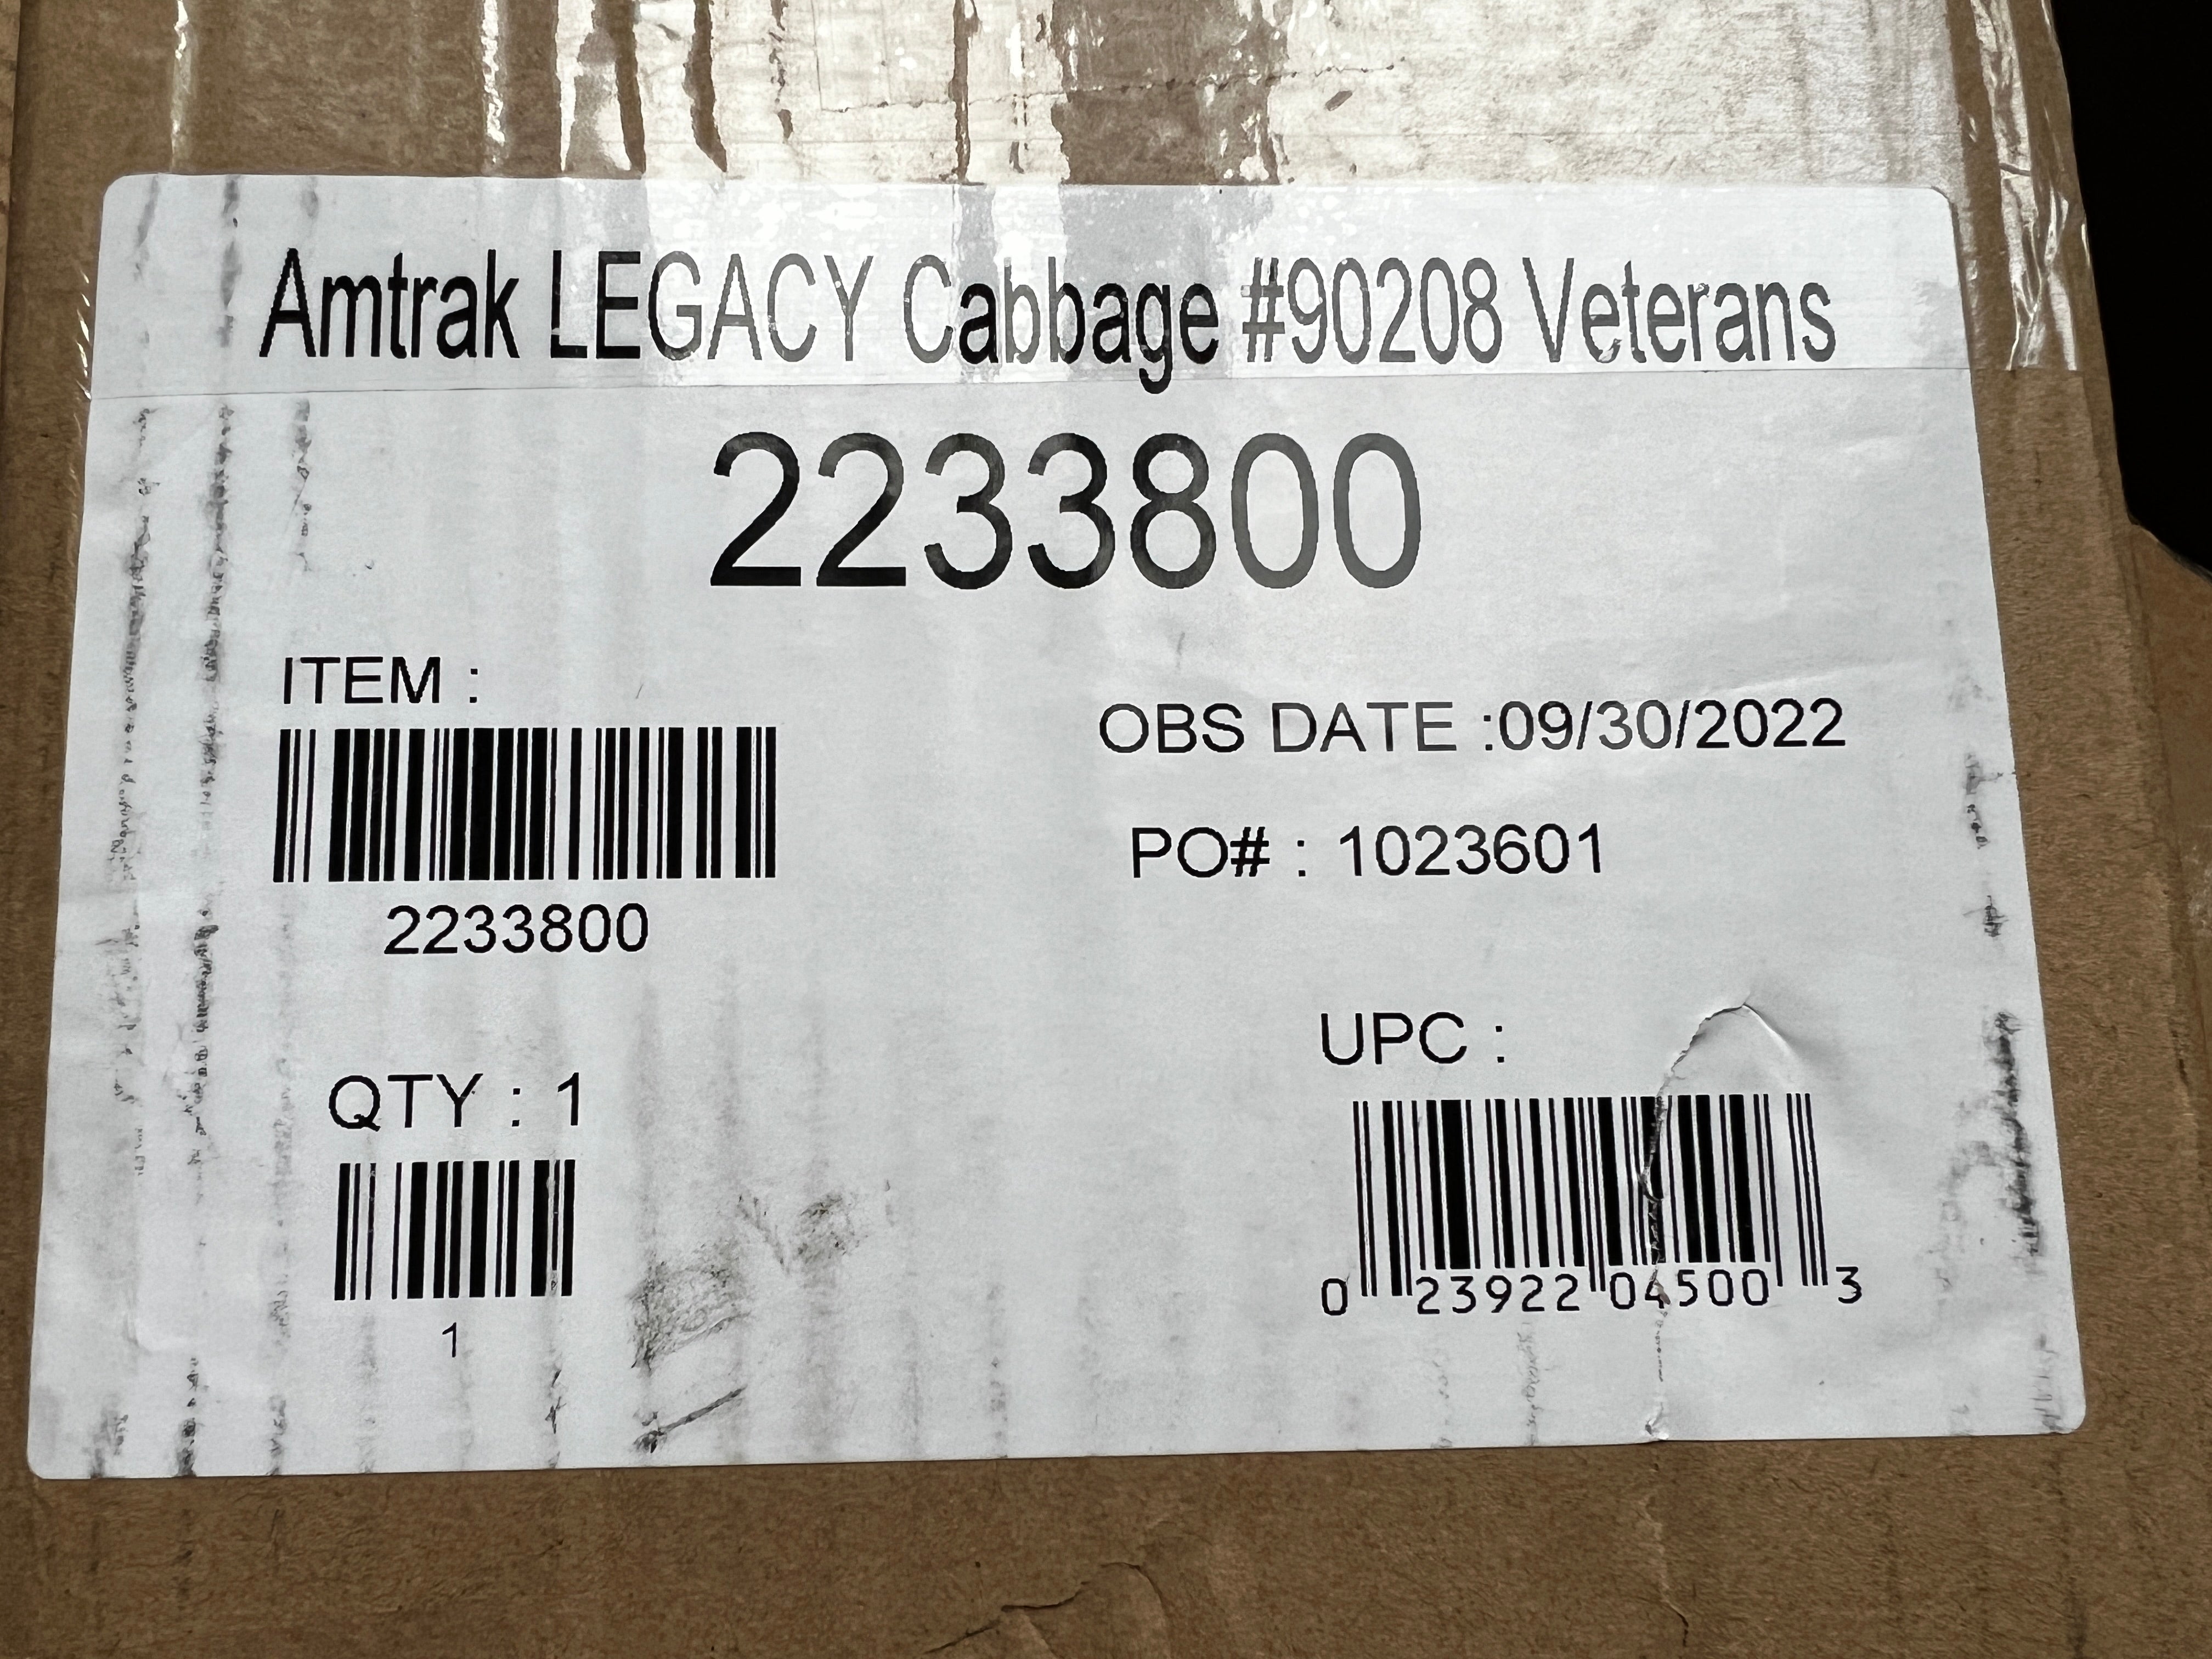 Lionel 2233800 - Legacy Cabbage Diesel Locomotive "Amtrak" #90208 (Veterans)